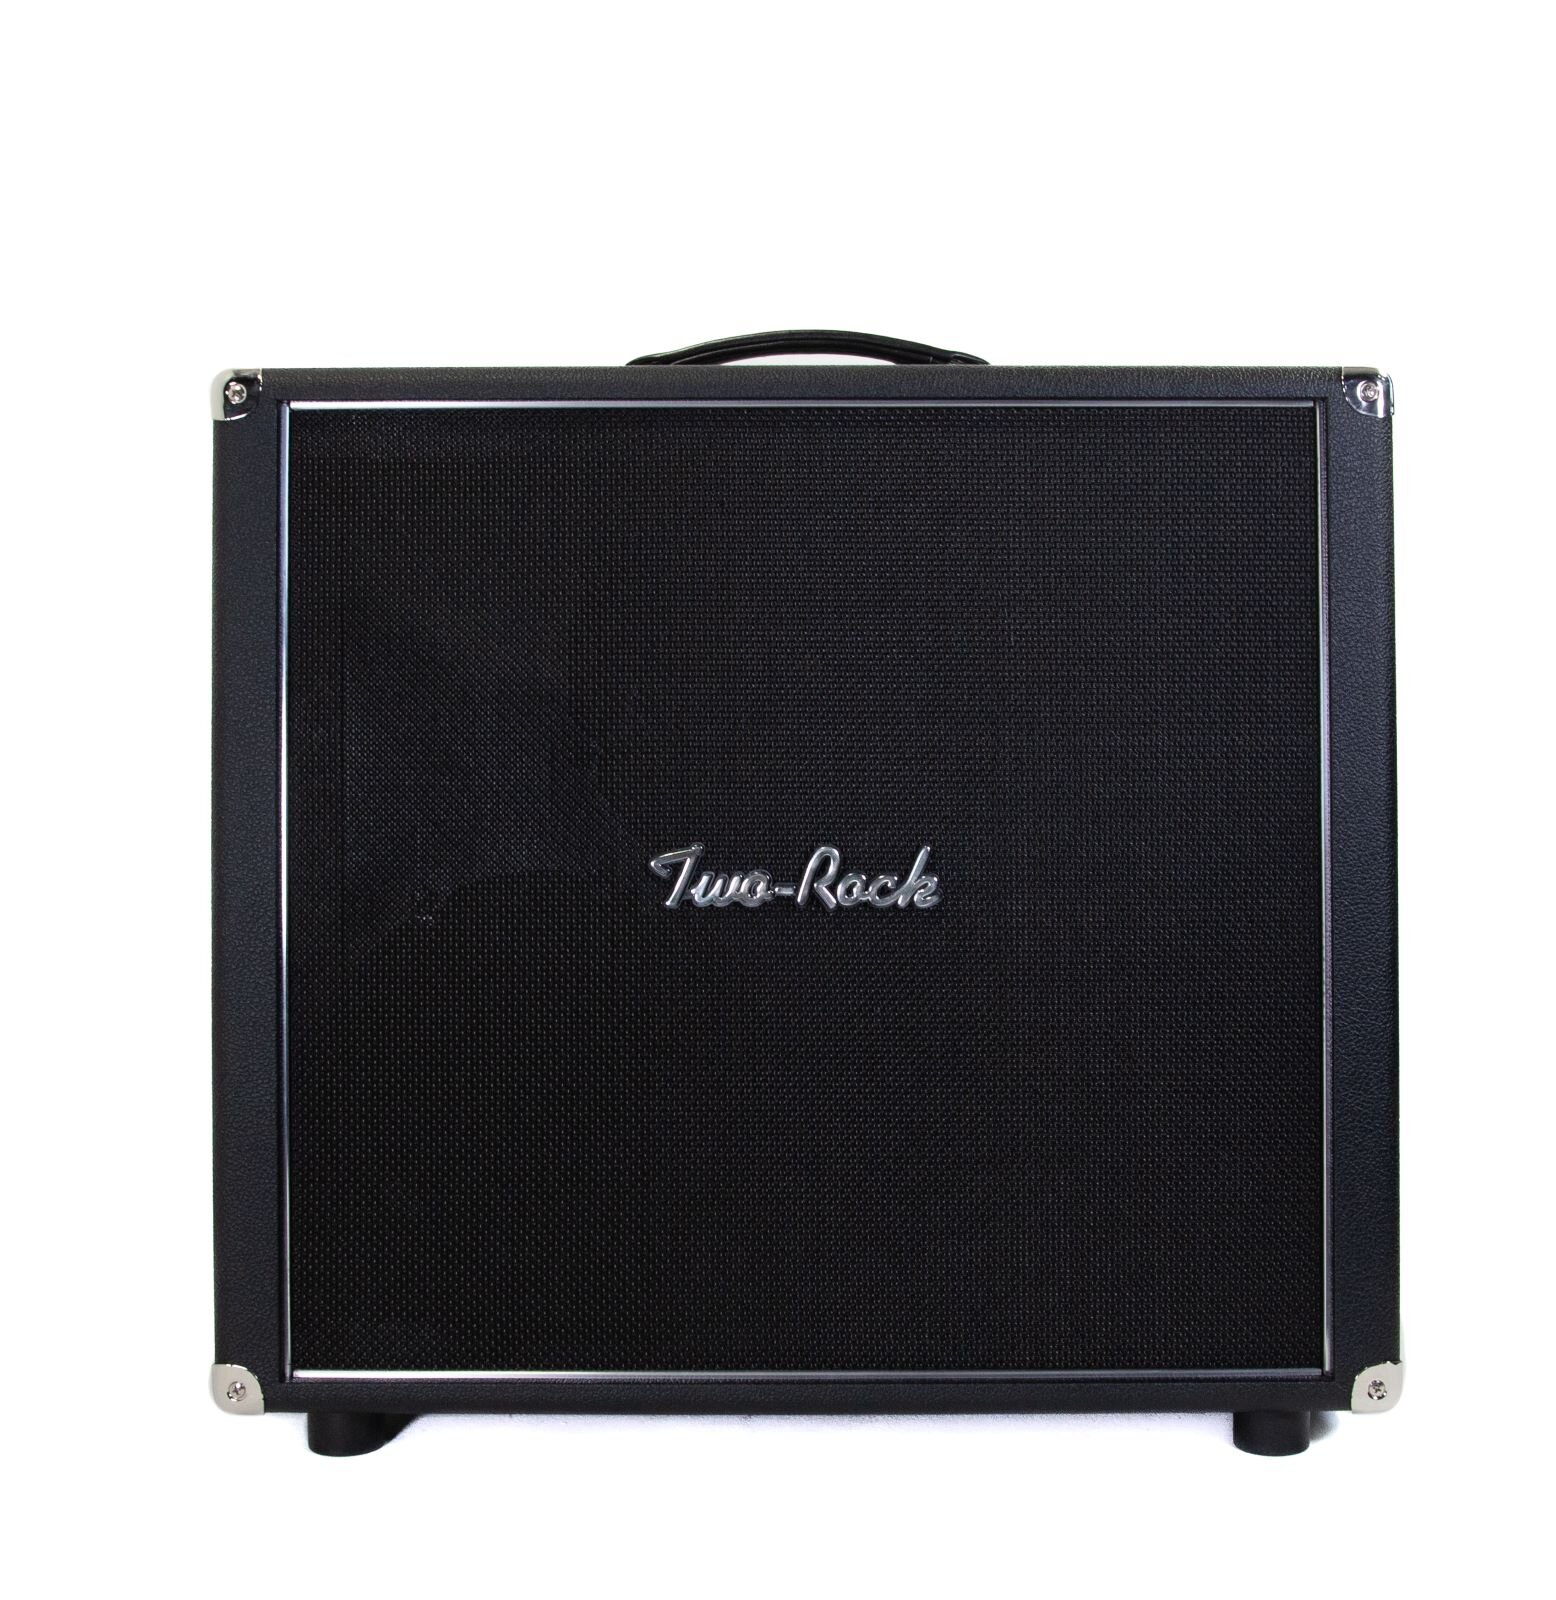 Two-Rock Joey Landreth 3 X 10 Black bronco, black matrix cloth, TR-10 speaker, 8 ohm : photo 1